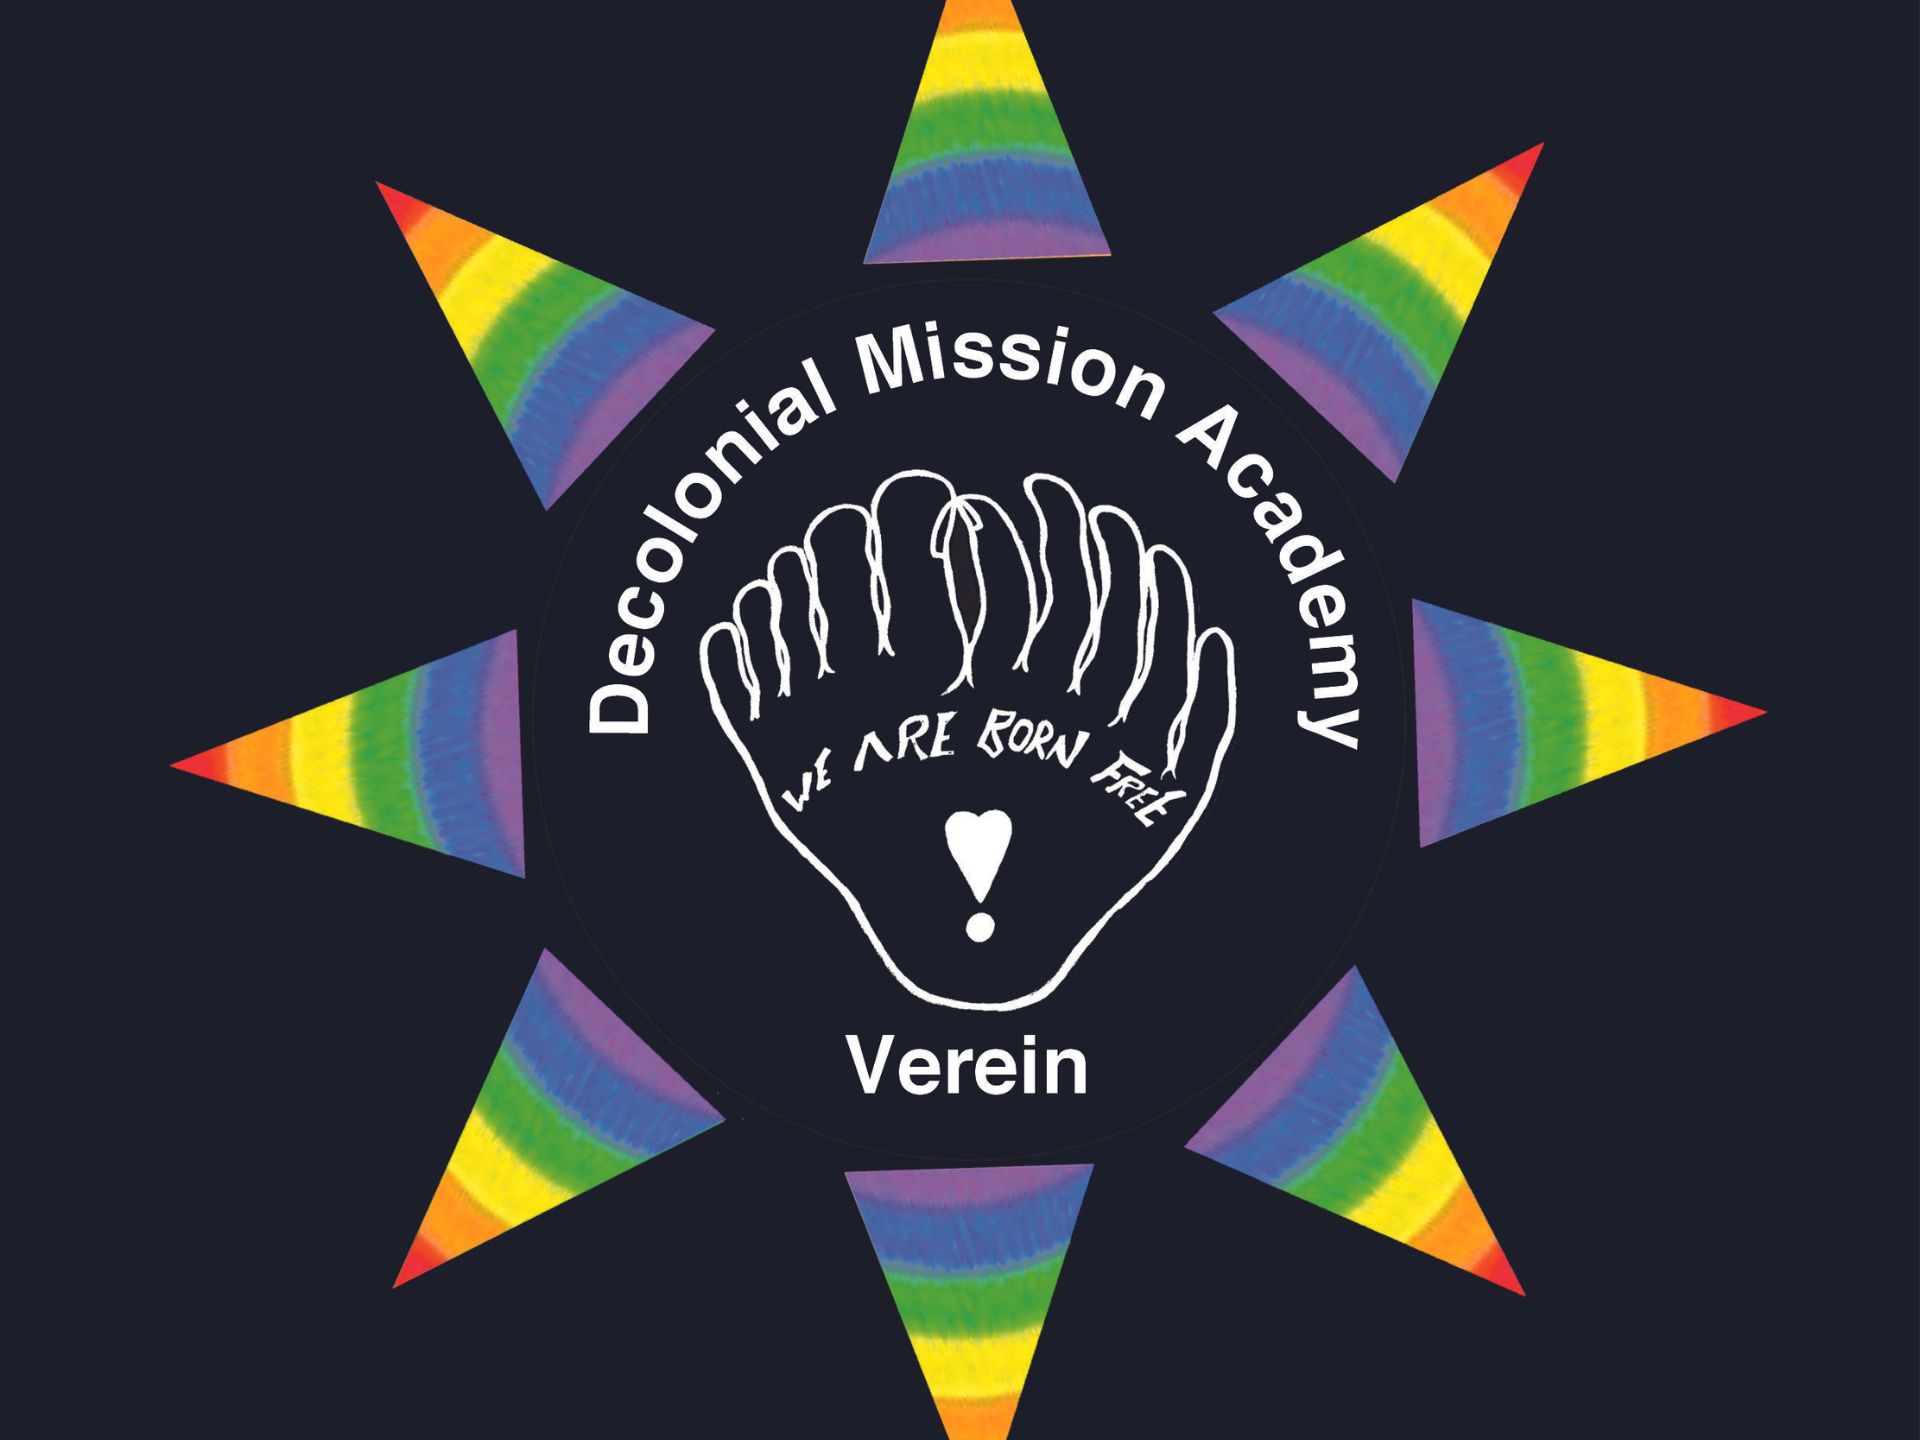 Decolonizing Voices - Kick off Wearebornfree Decolonial Mission Academy